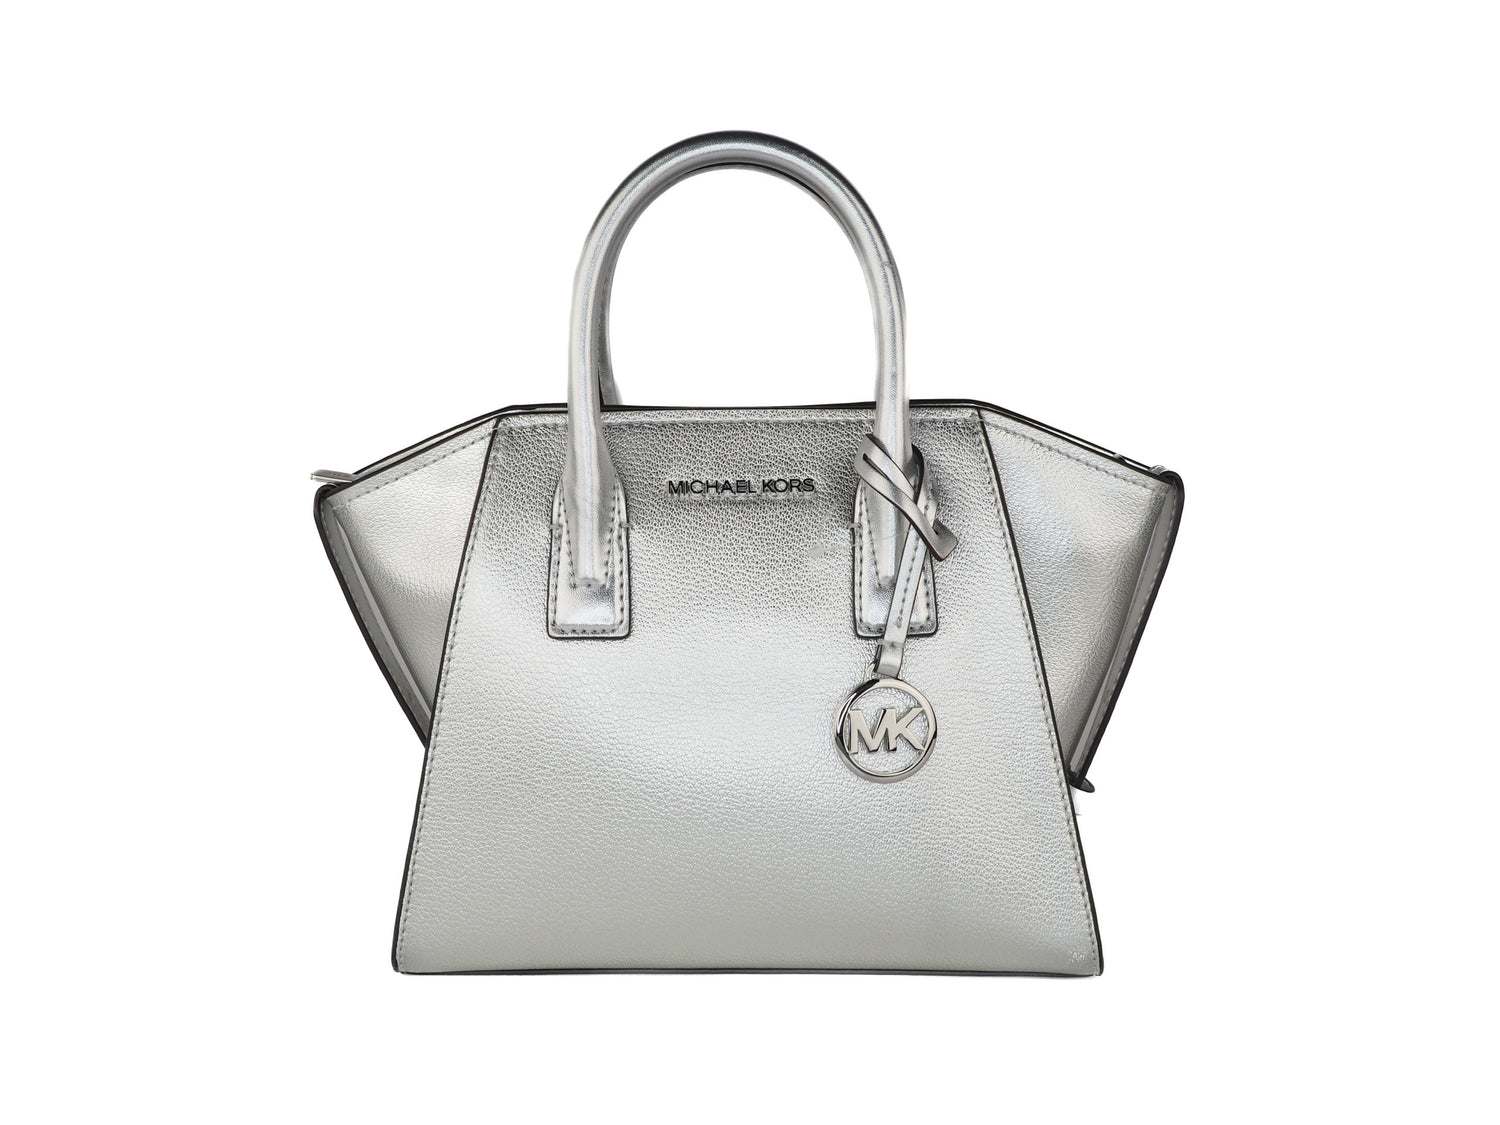 Avril Small Pebble Leather Top Zip Satchel Crossbody Handbag (Silver)